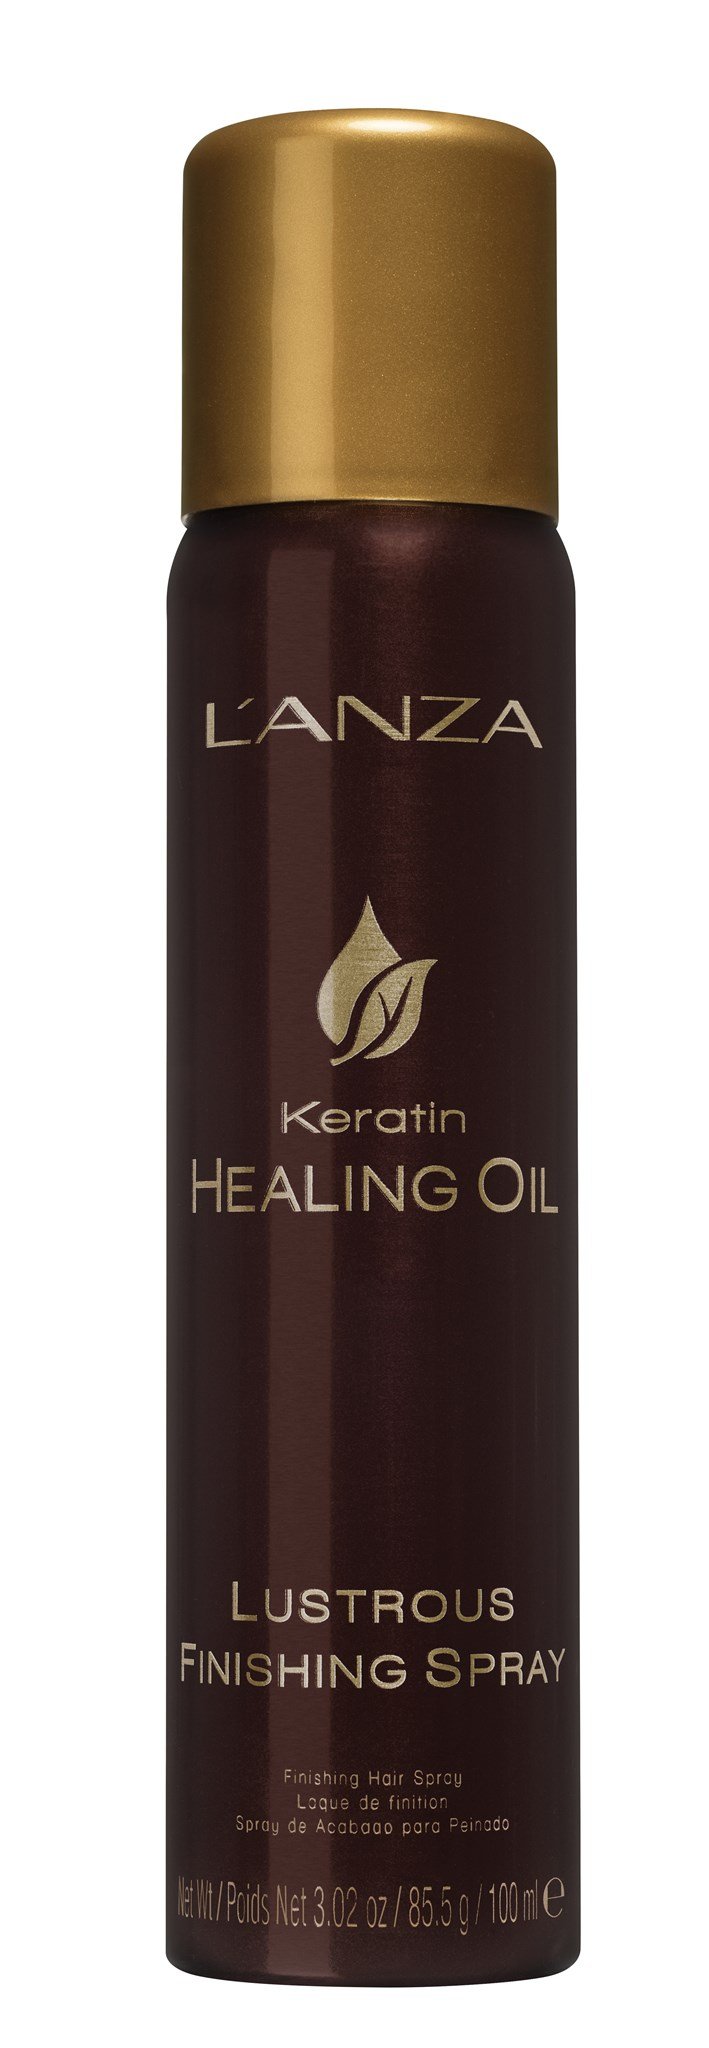 100ml Lanza Keratin Healing Oil Finish Spray